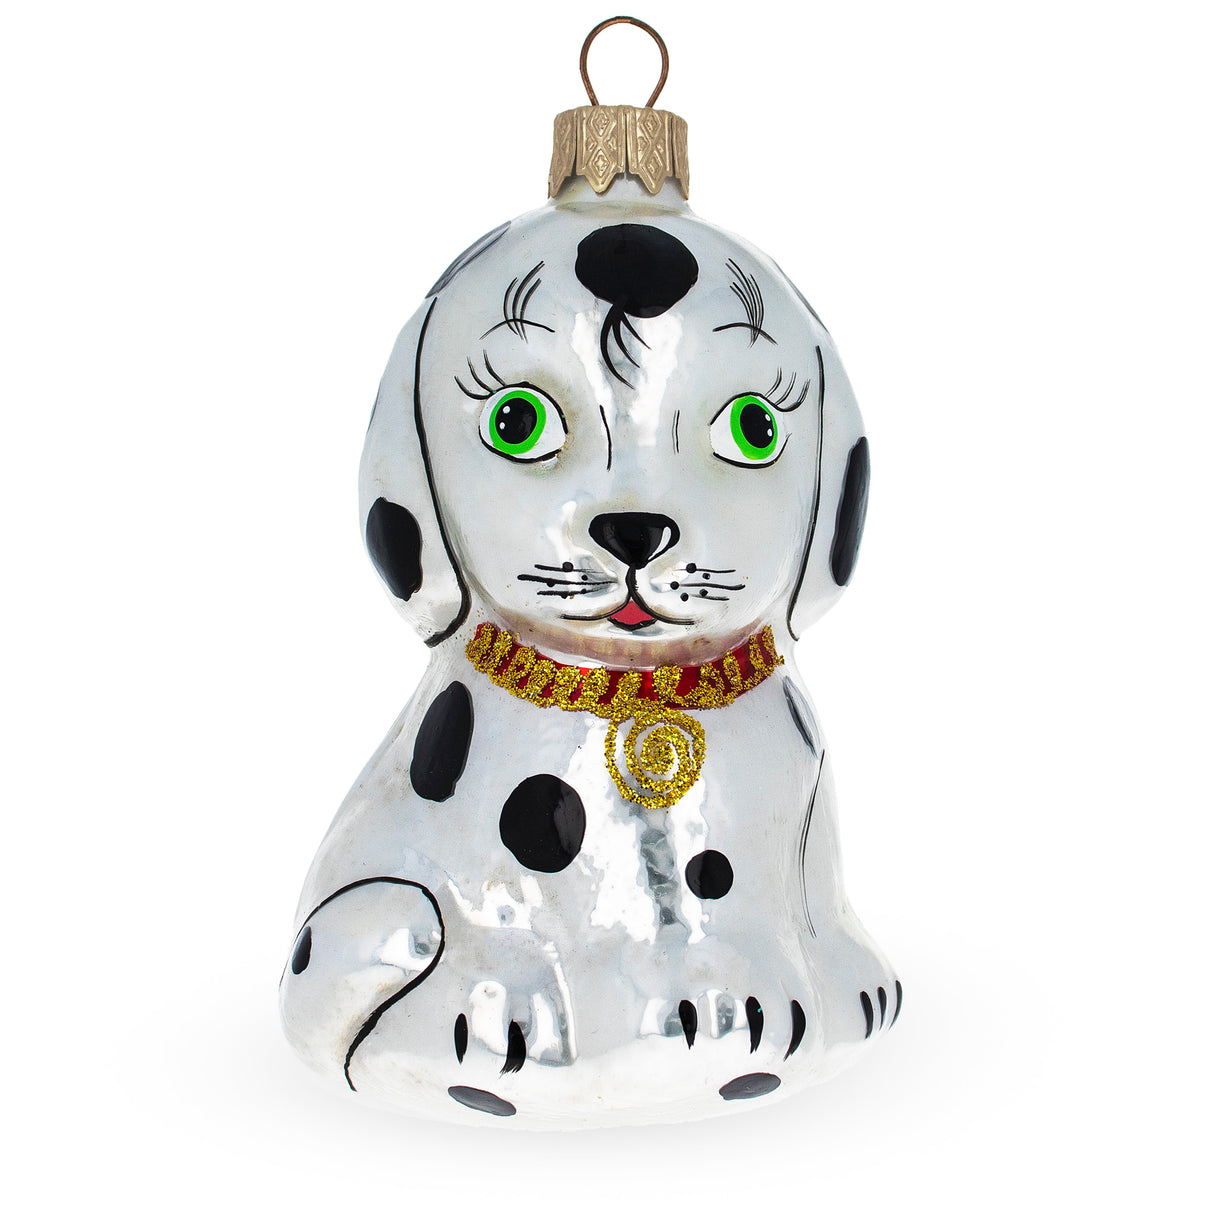 Glass Dalmatian Puppy Glass Christmas Ornament in White color